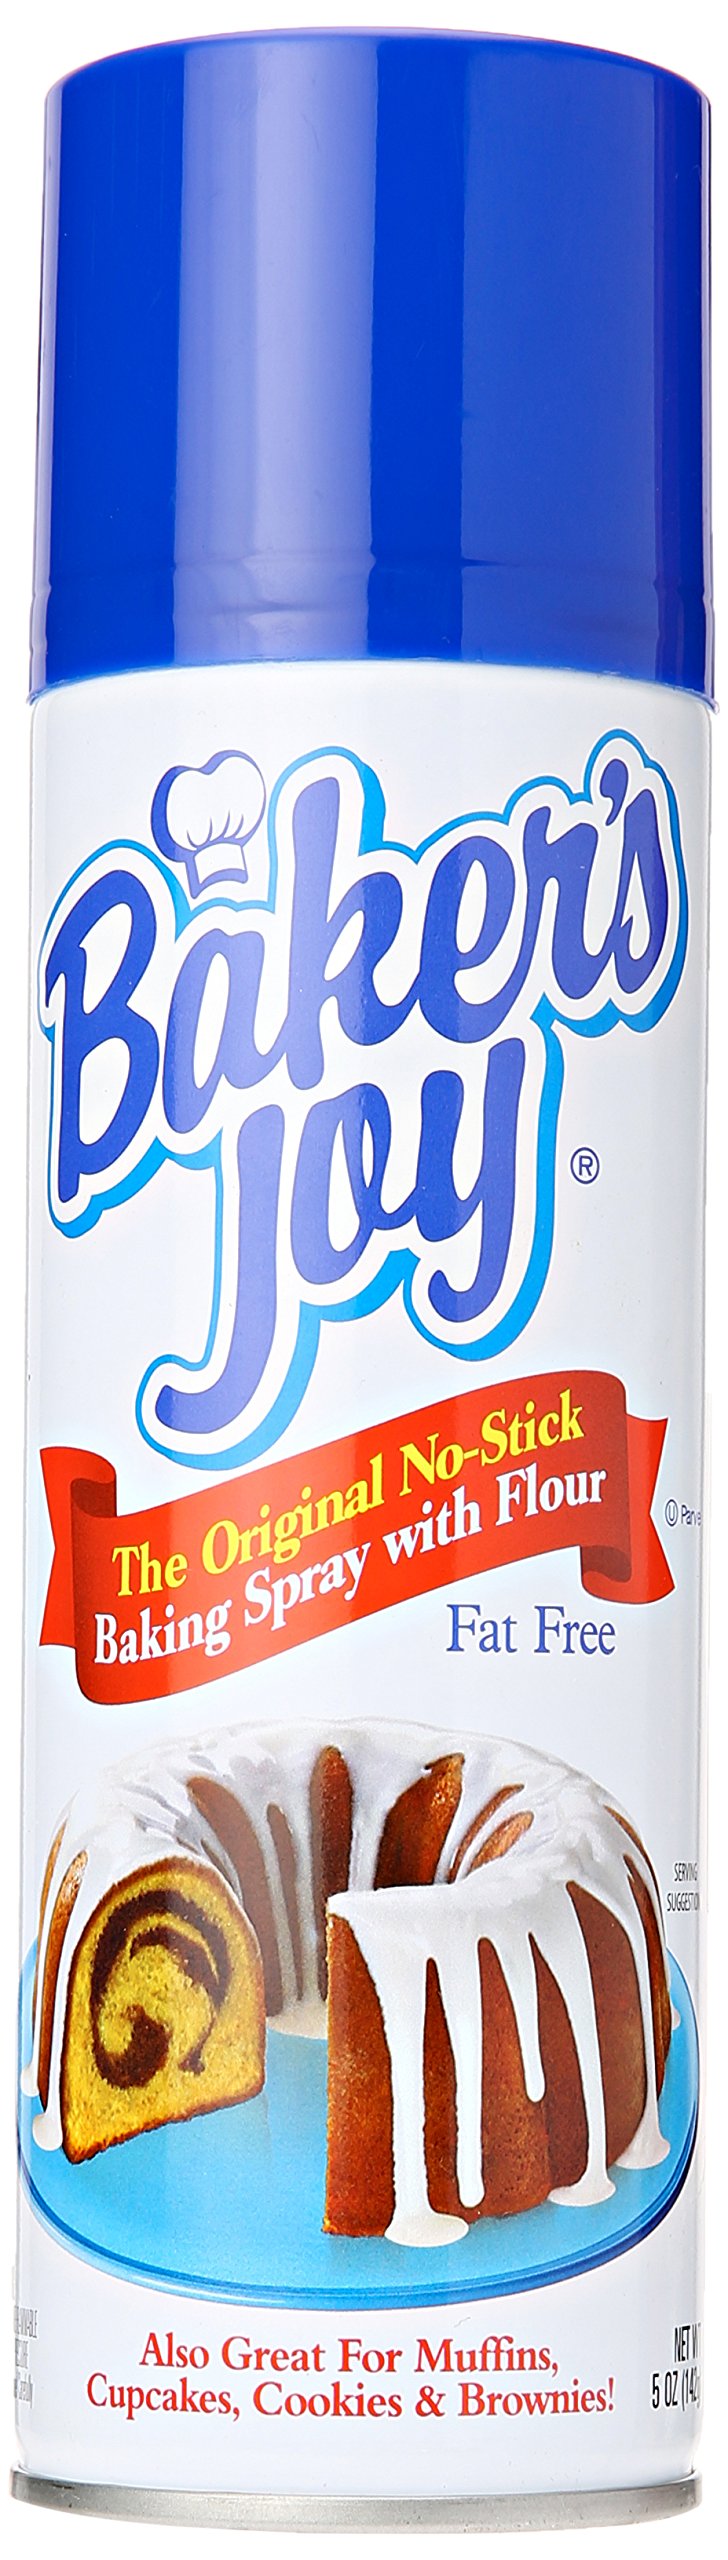 The Baker's Joy